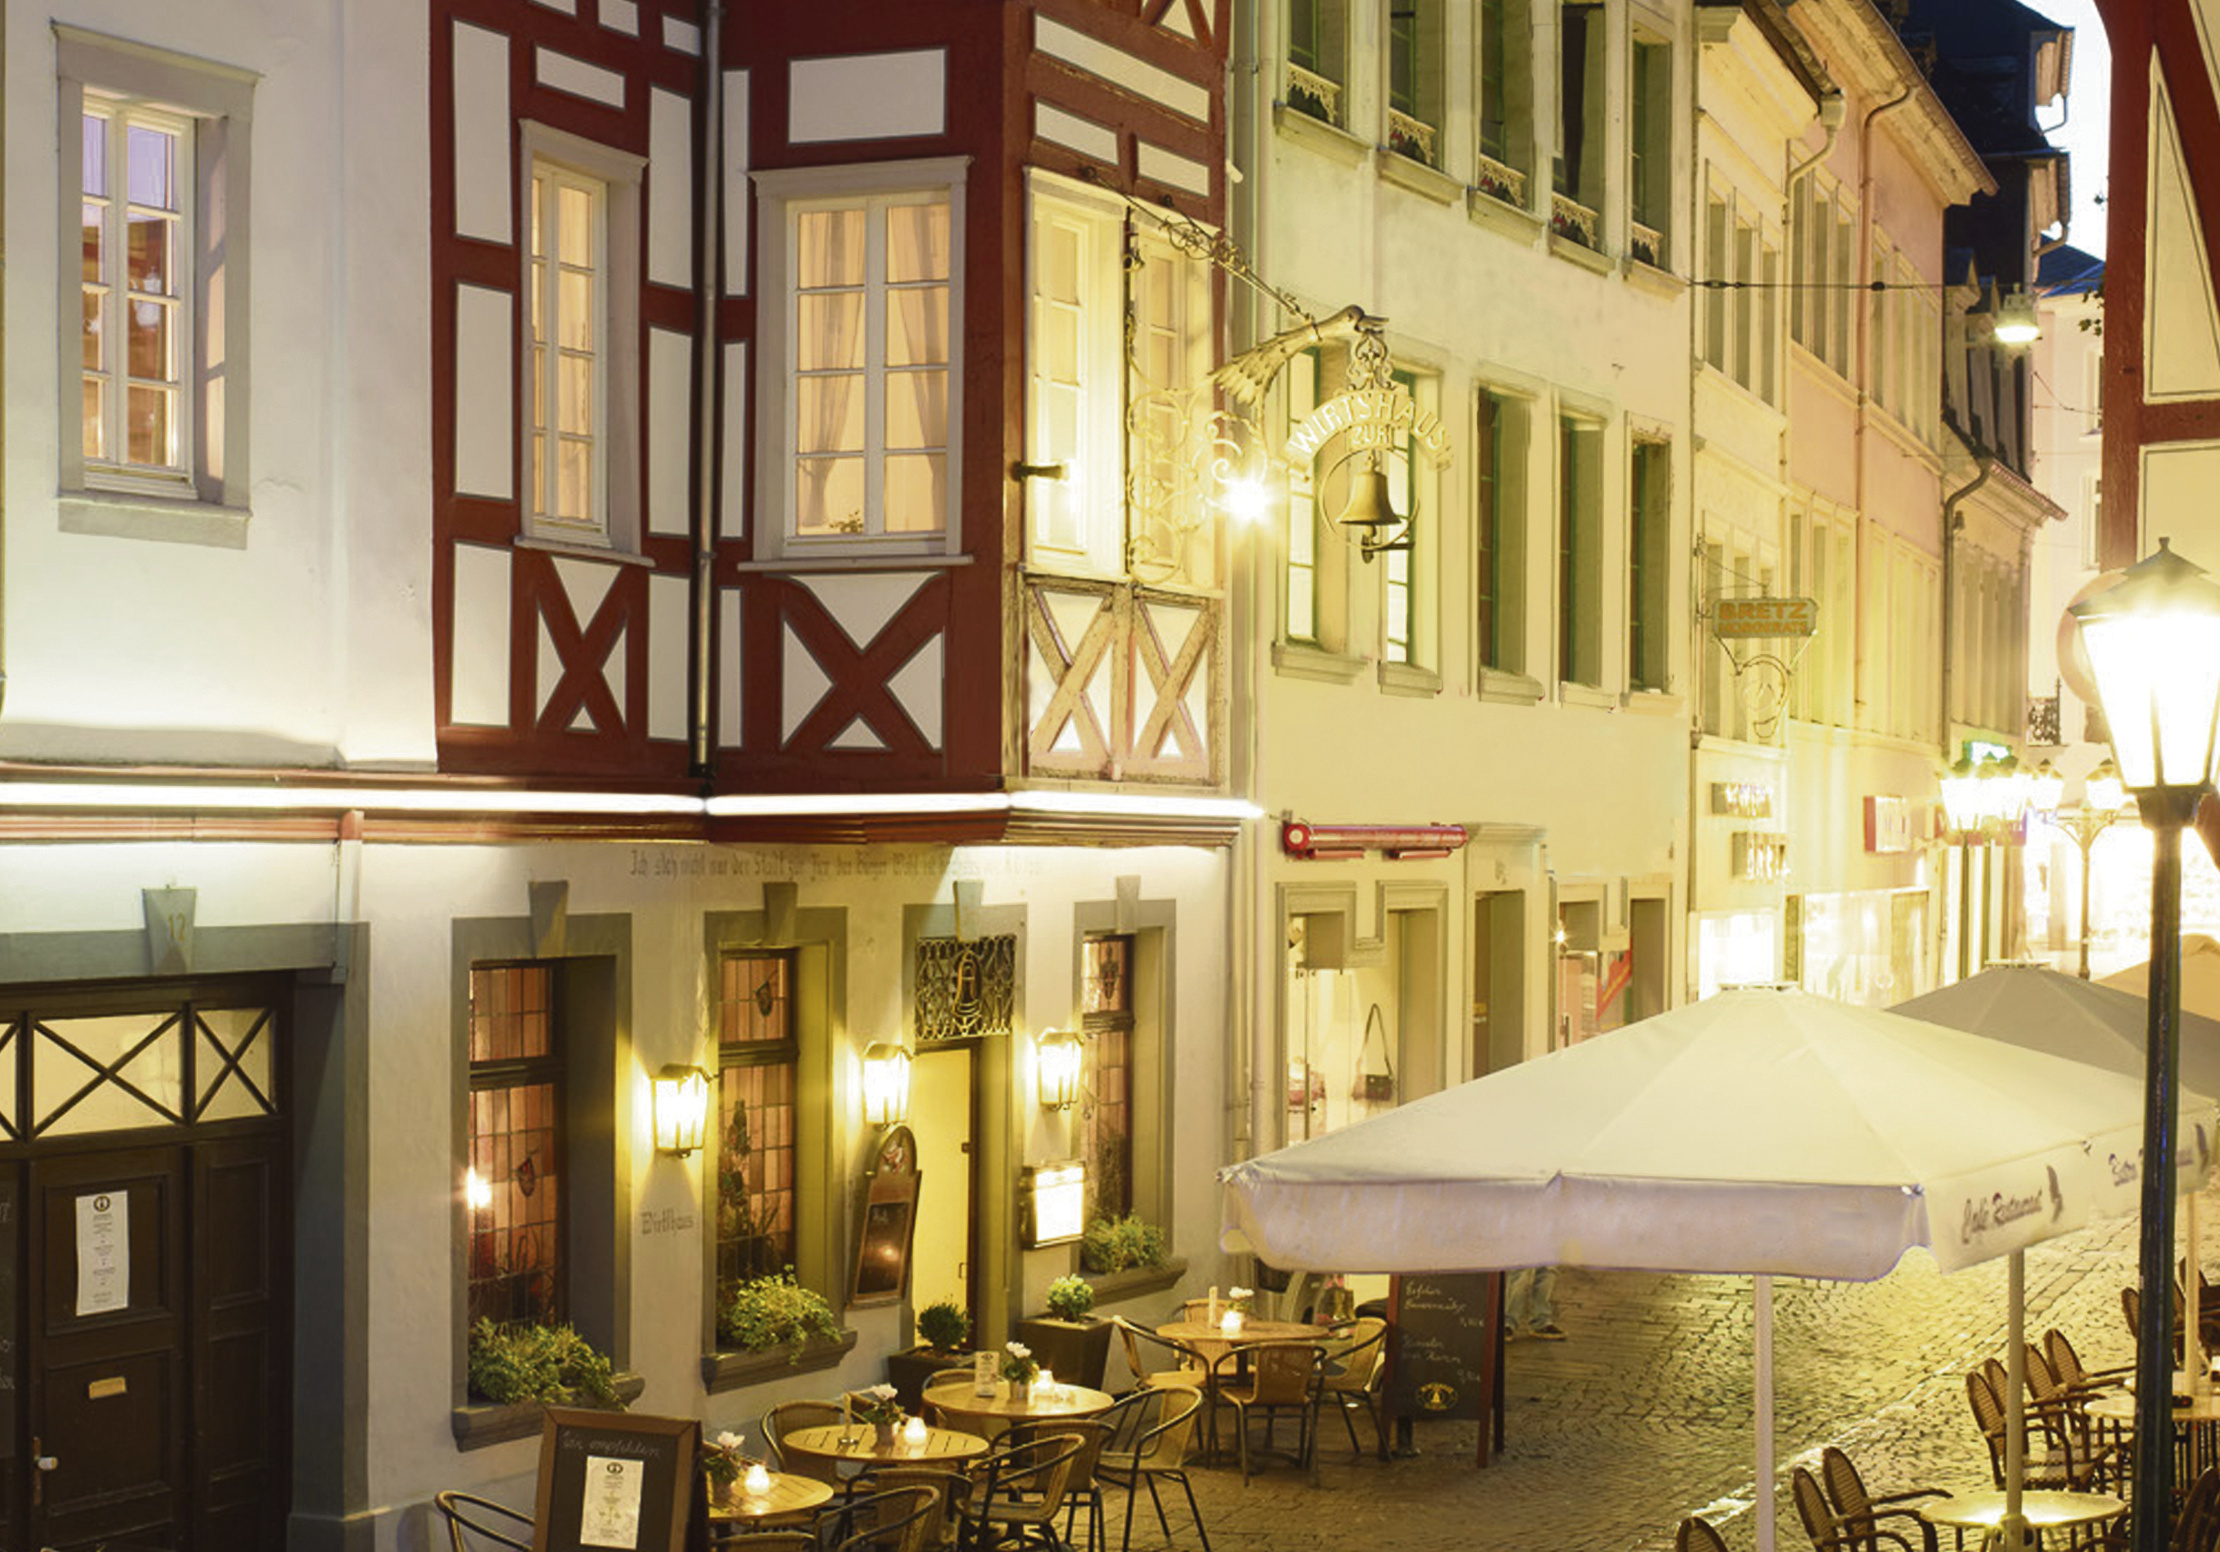 Romantik Hotel Zur Glocke, Trier.
